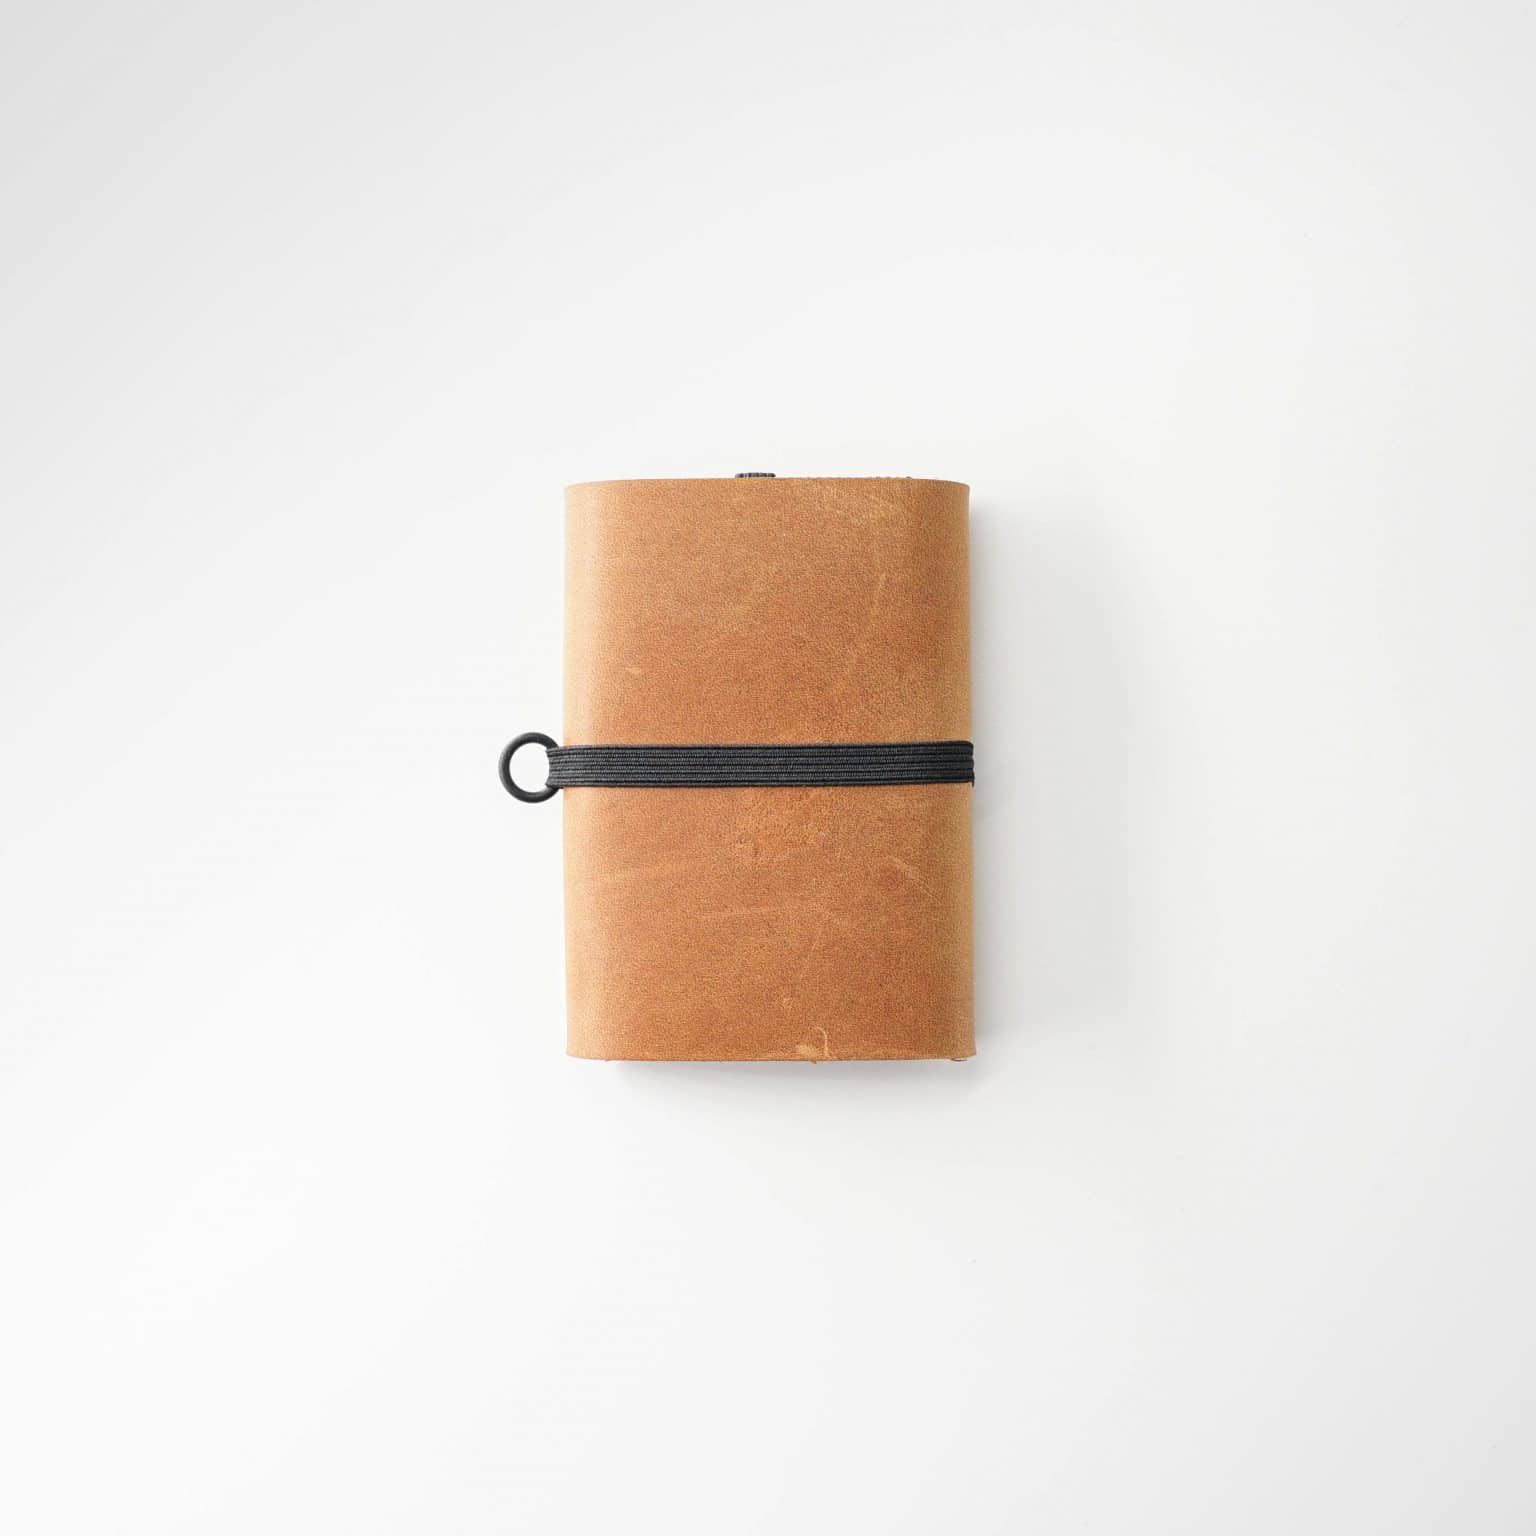 Article Fait-main minimalist wallet showcasing artisanal quality. t